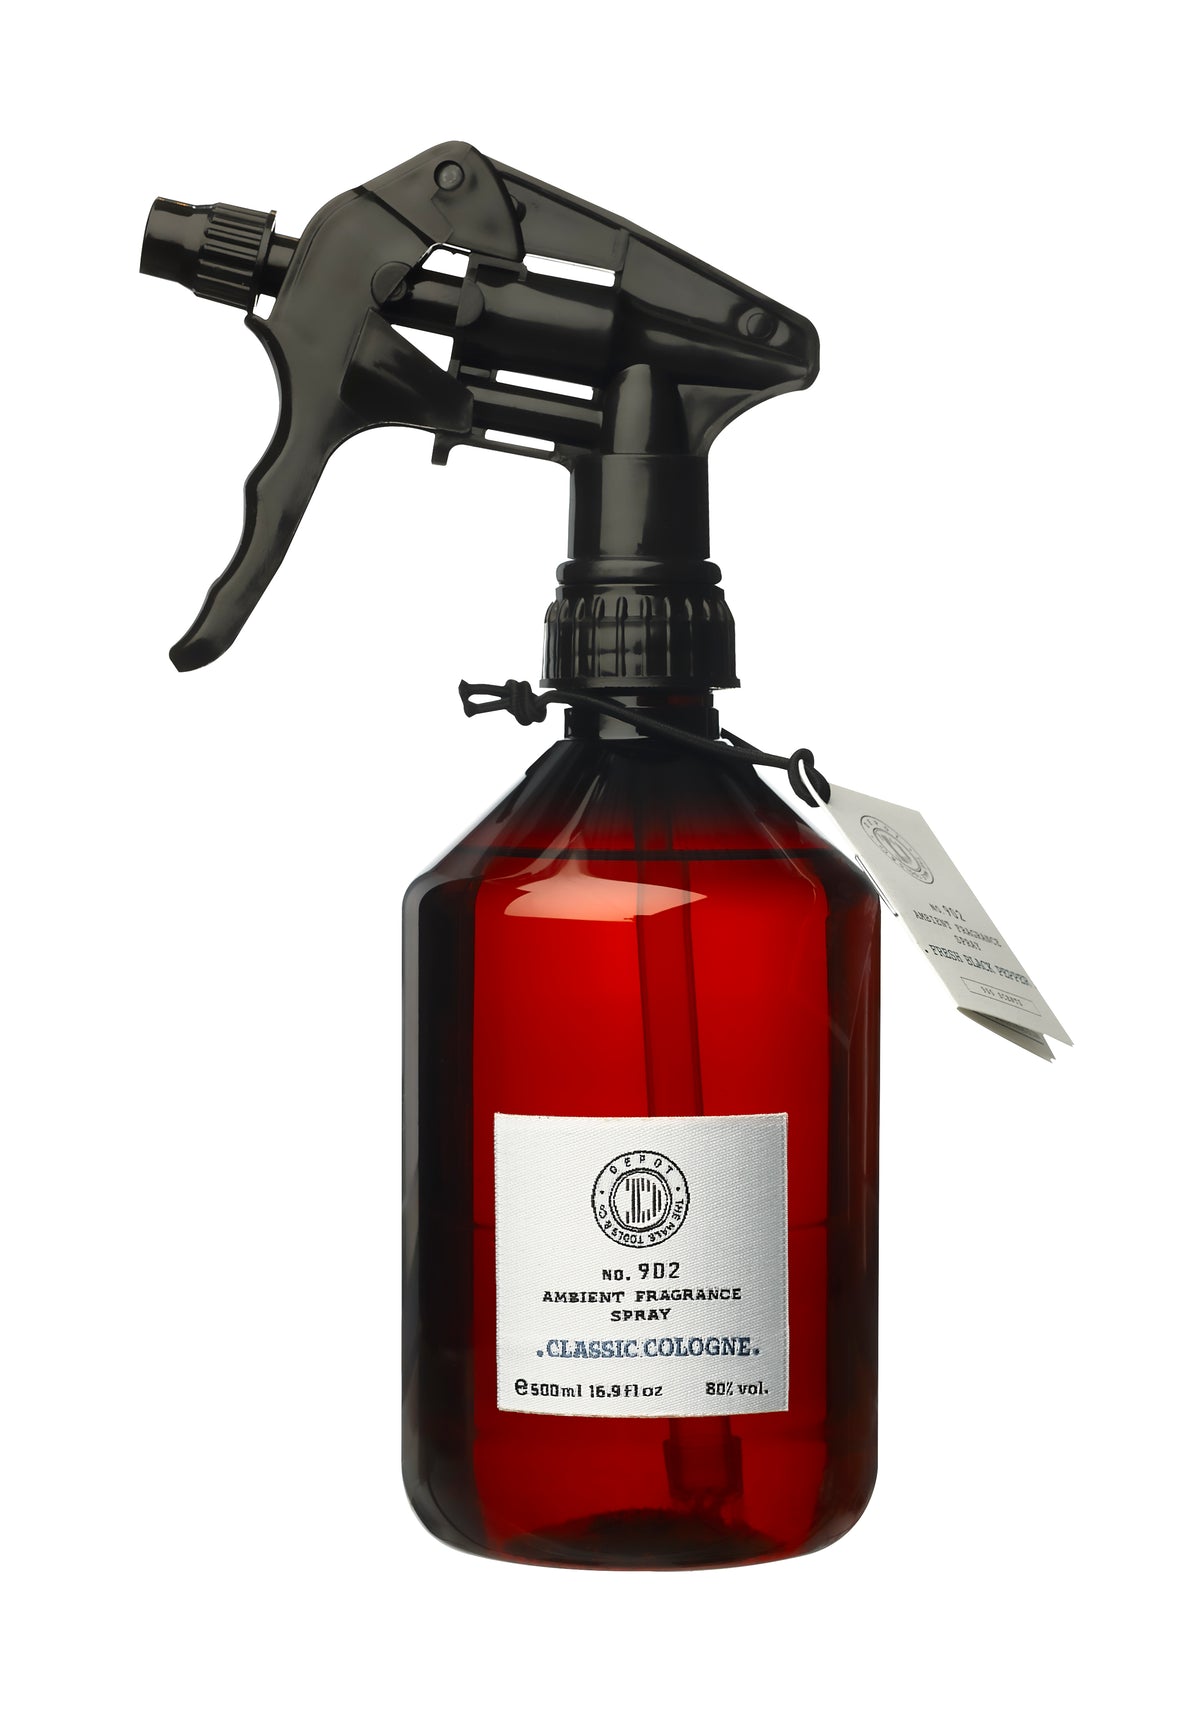 Ambient Fragrance Spray - Ilmsprey